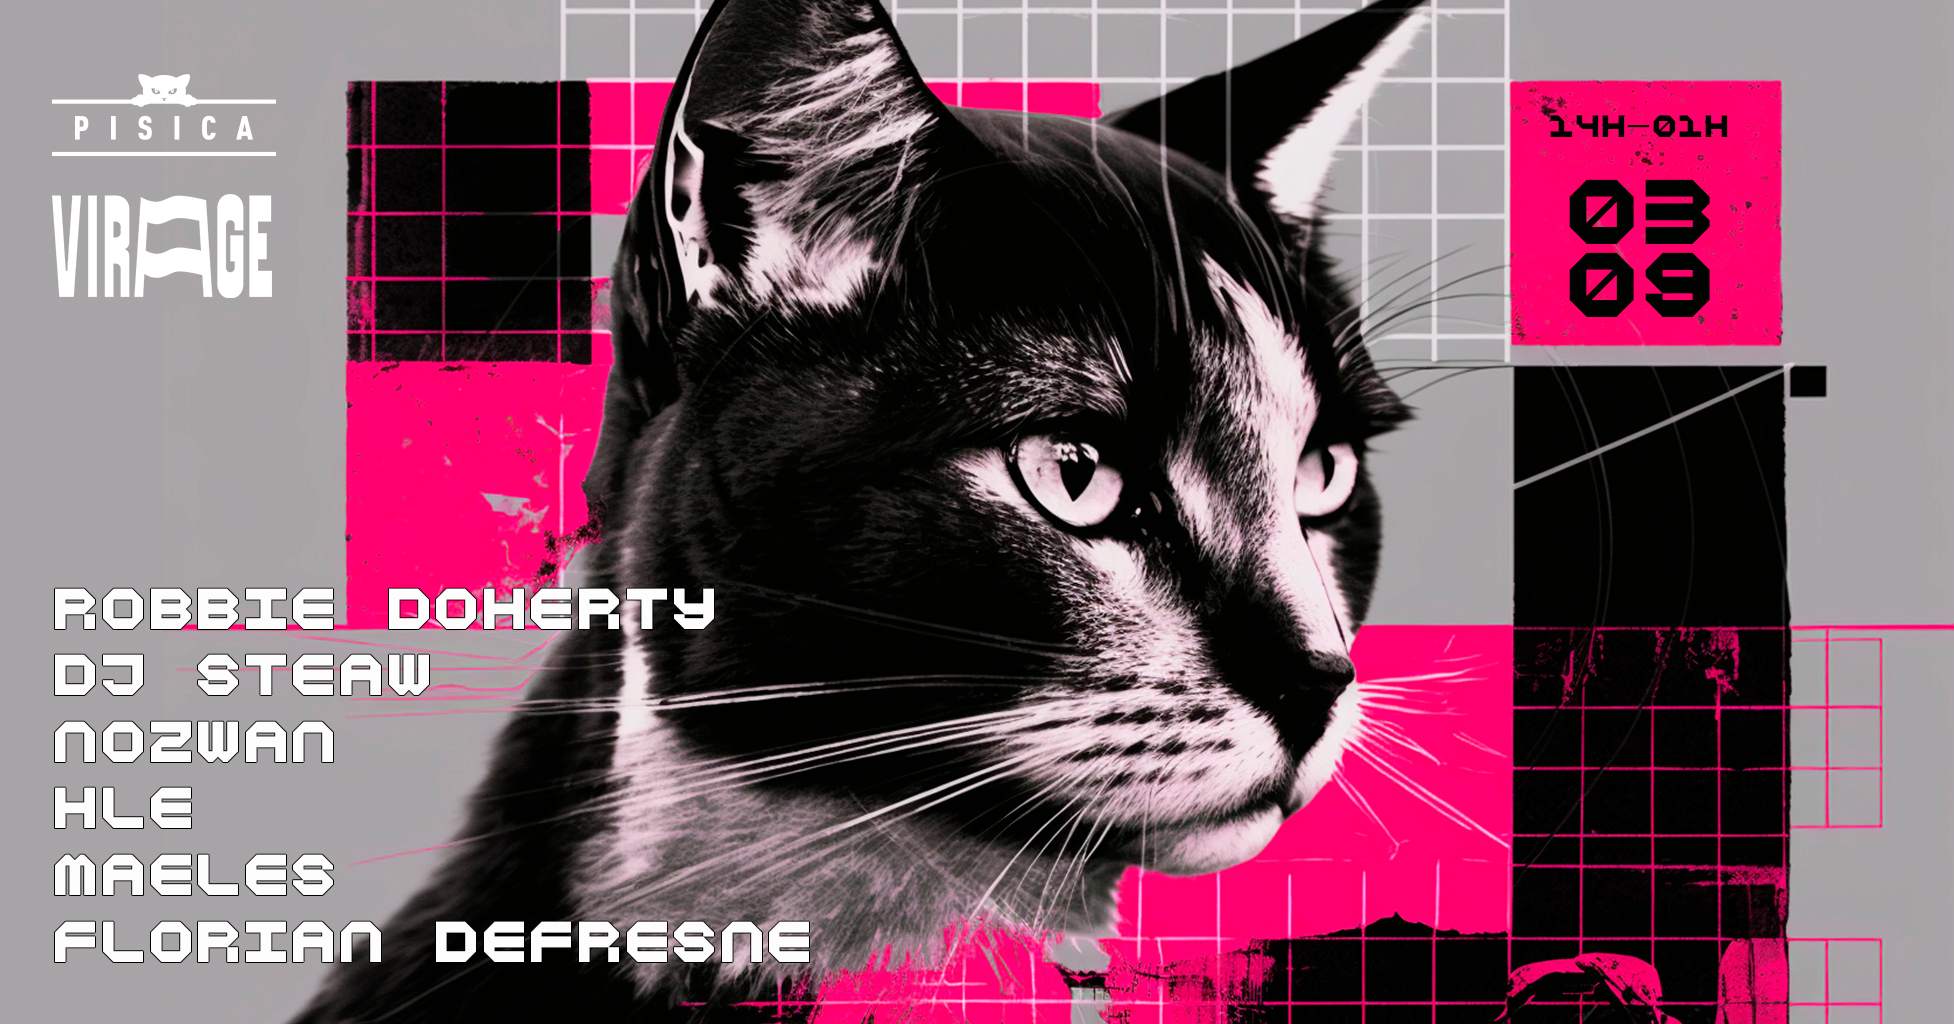 Pisica Open Air x Virage: Robbie Doherty - Página frontal